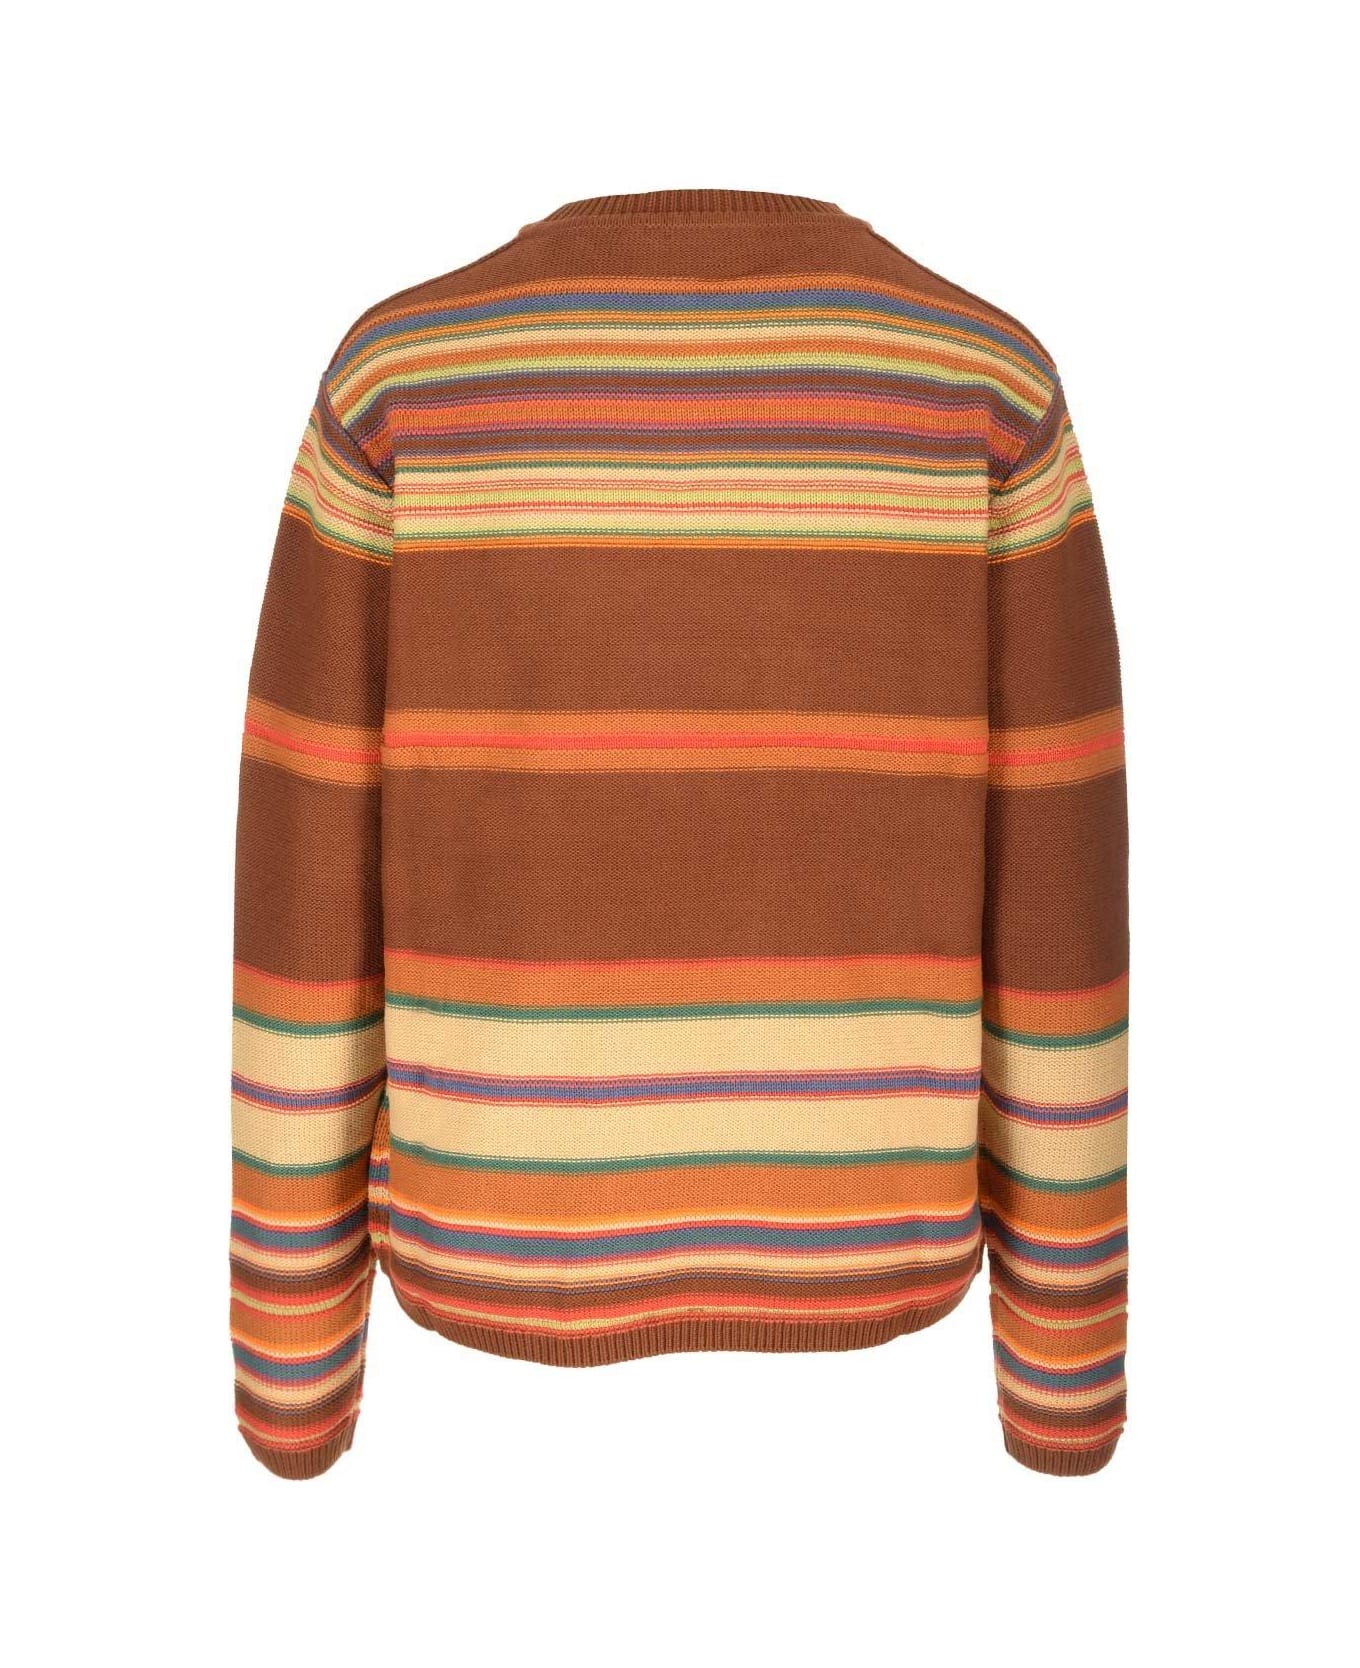 Acne Studios Striped Crewneck Sweater - Brown